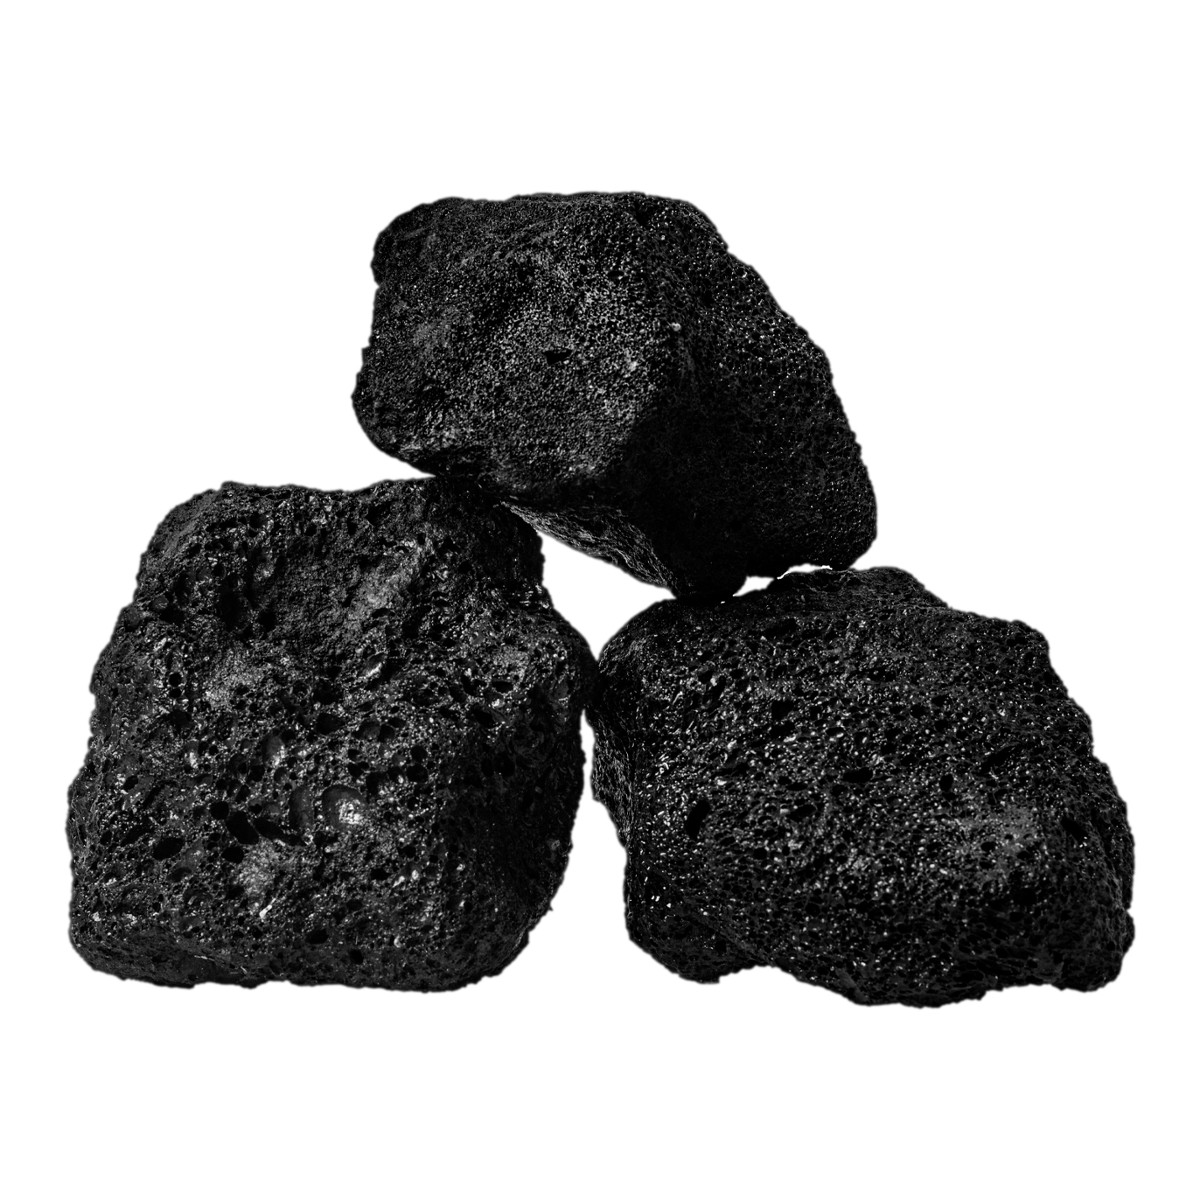 Black lava rock 1Kg